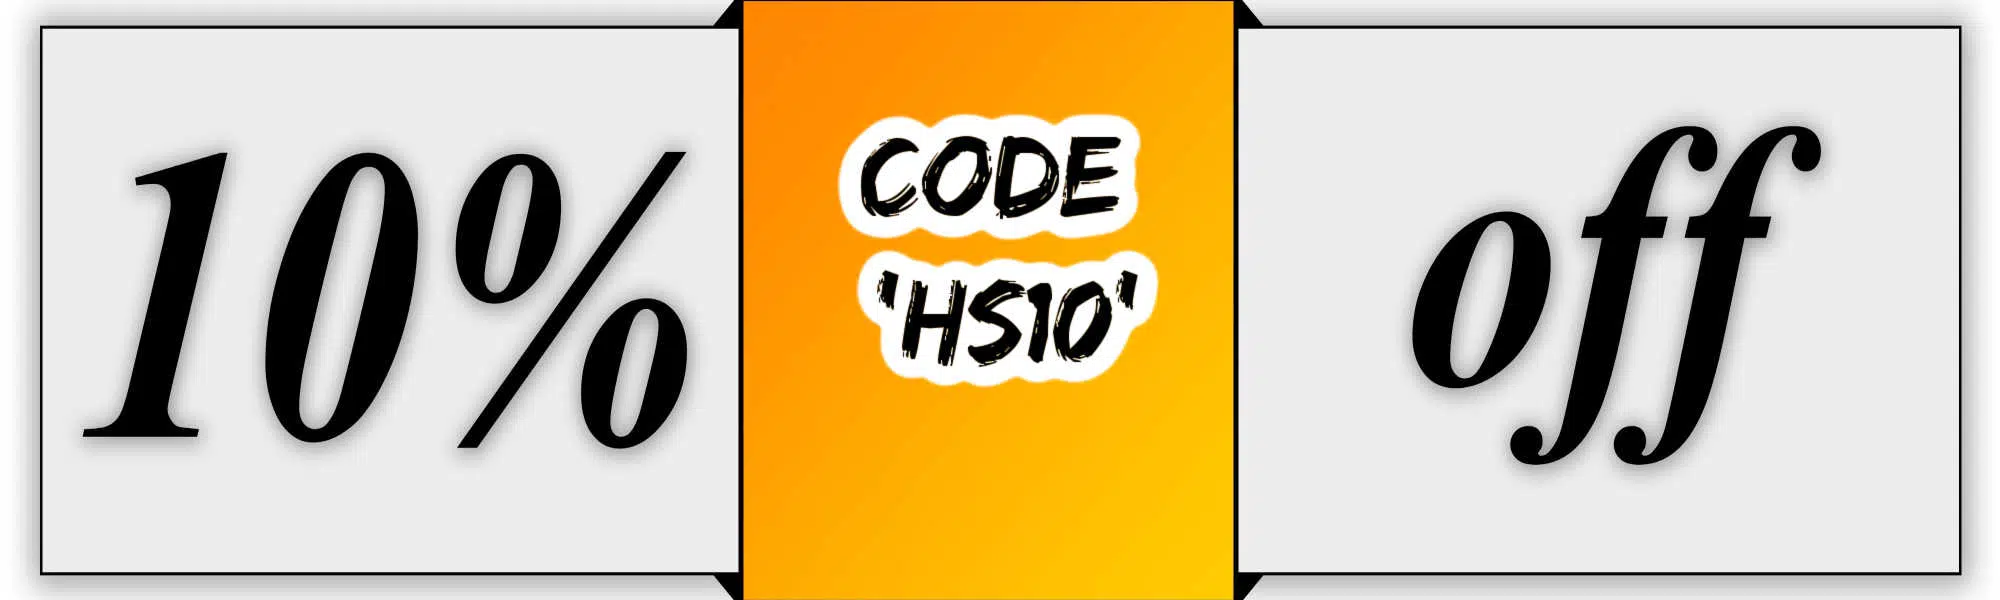 image of nodzilla kratom coupon code